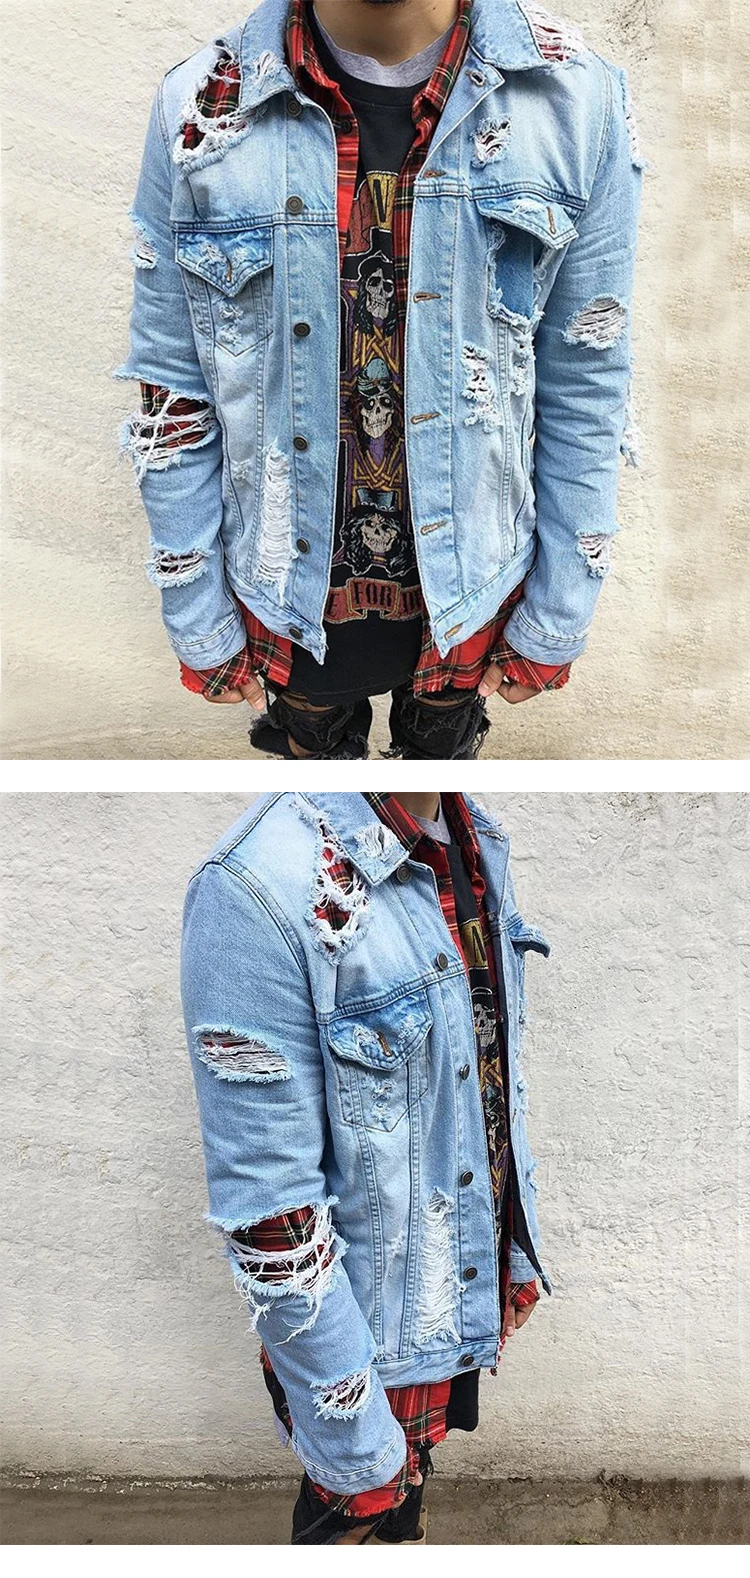 jaqueta jeans masculina personalizada